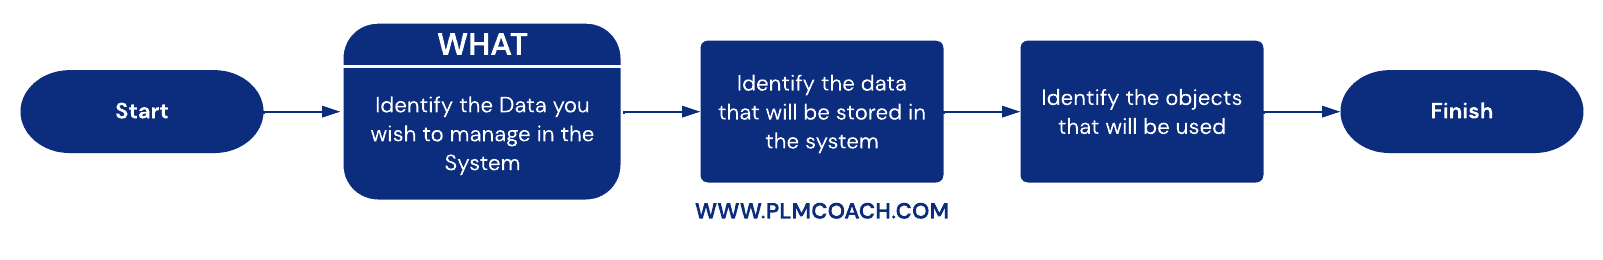 Windchill-Identify-the-Data-PLM-Coach